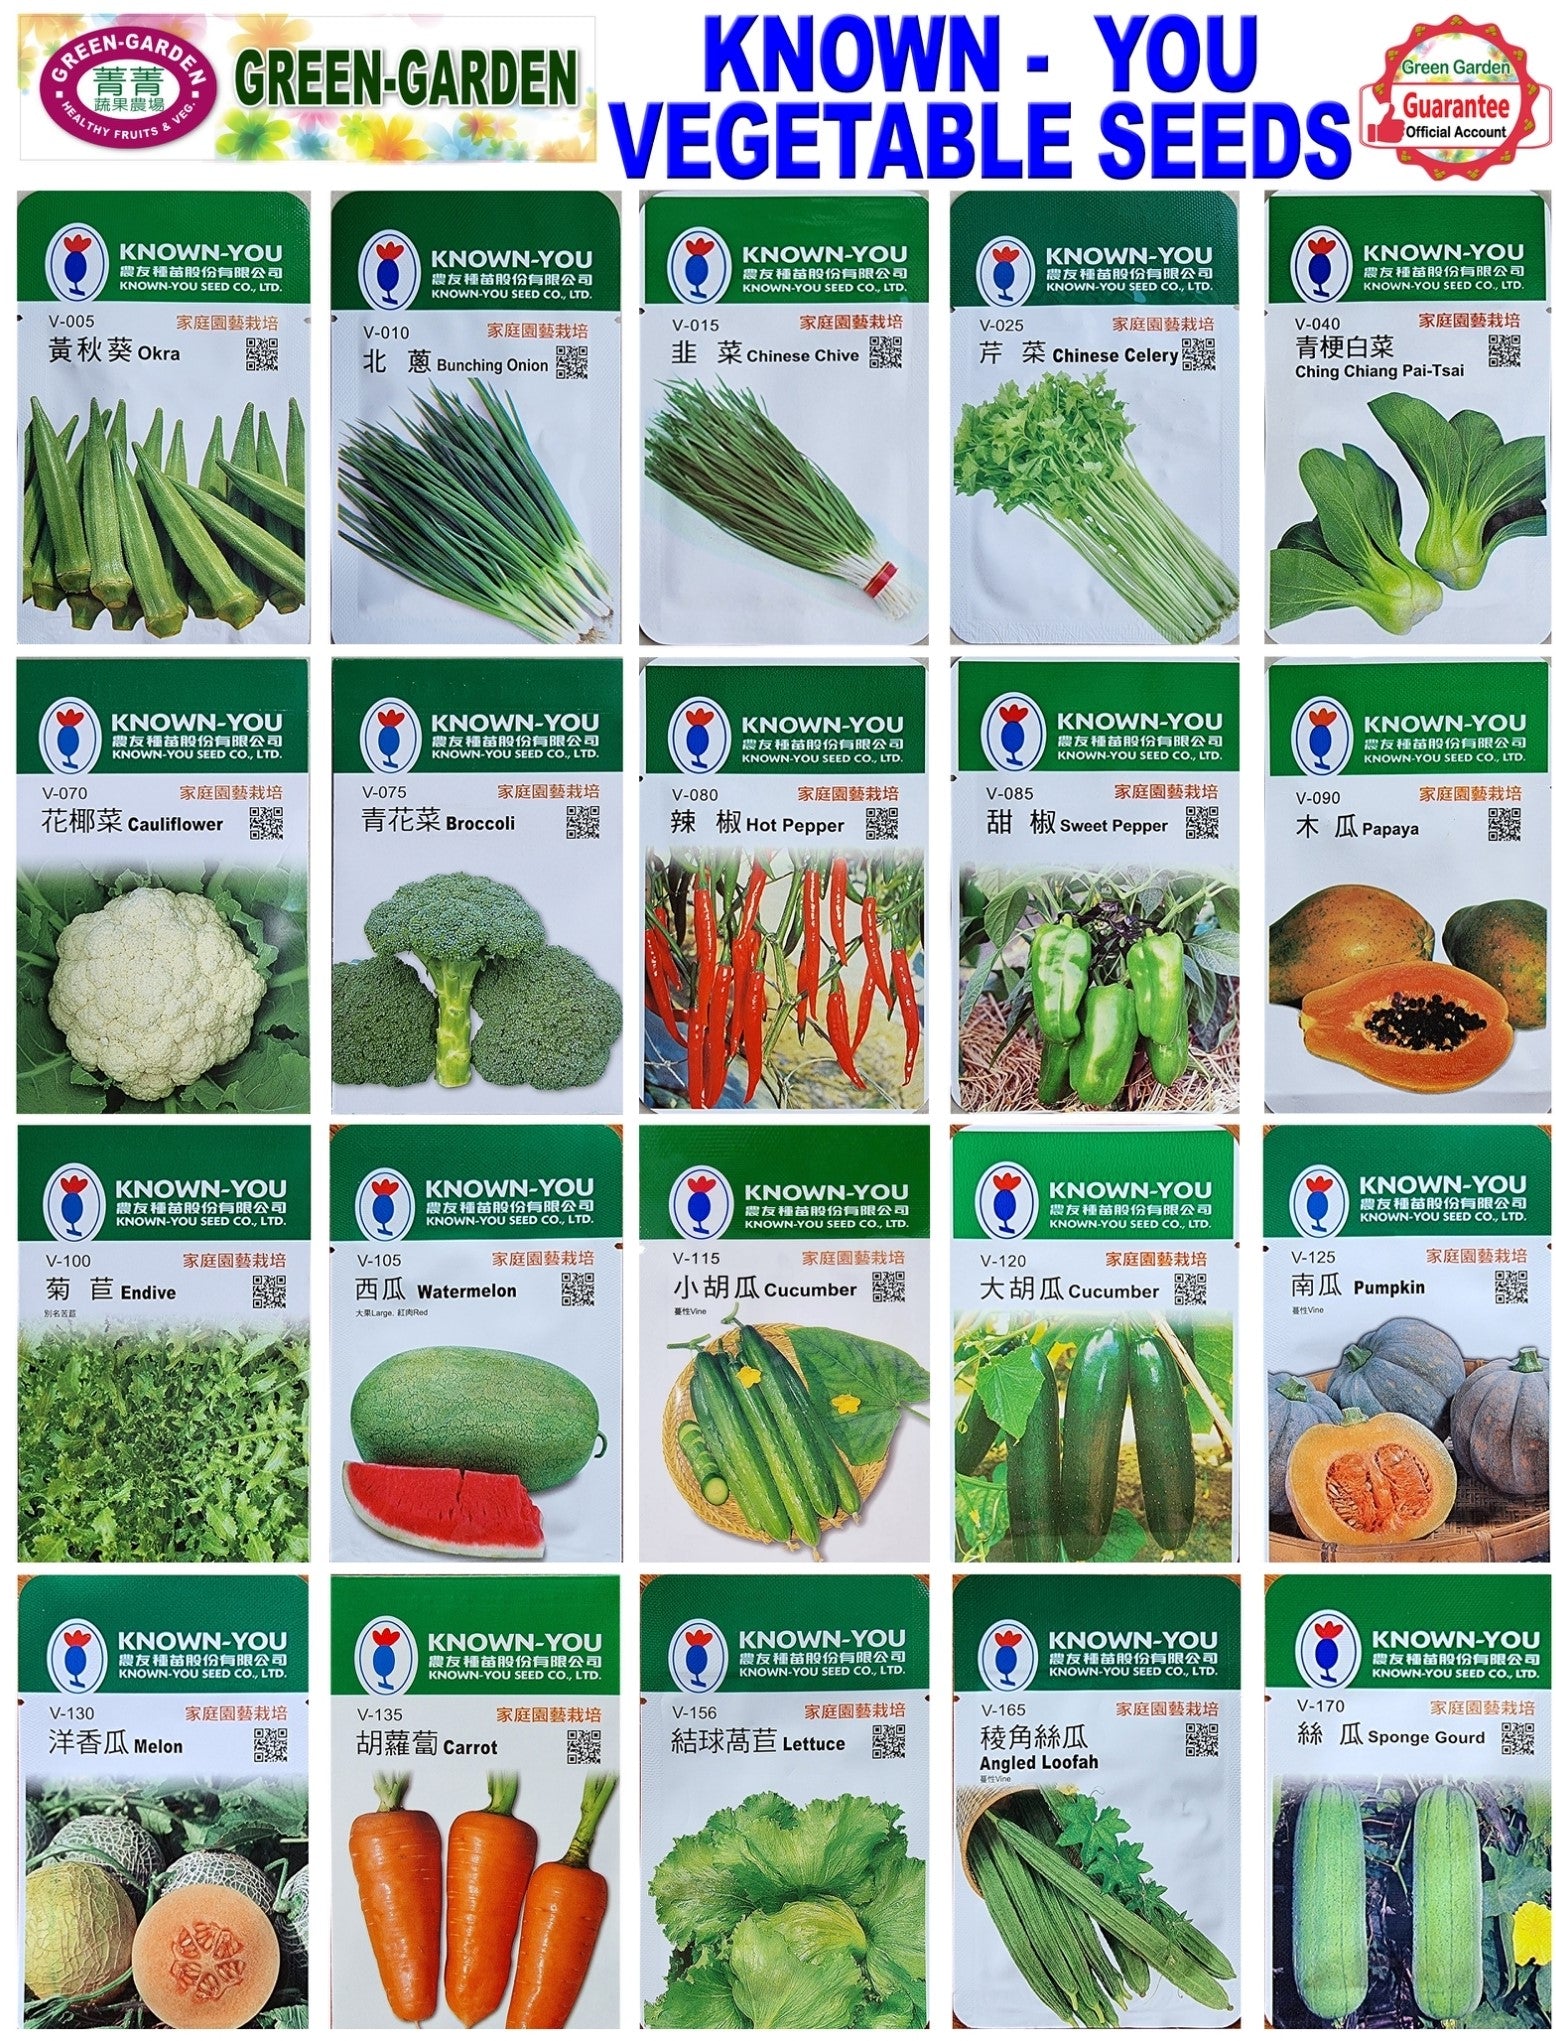 Known You Vegetable Seeds (V-350 Eggplant)